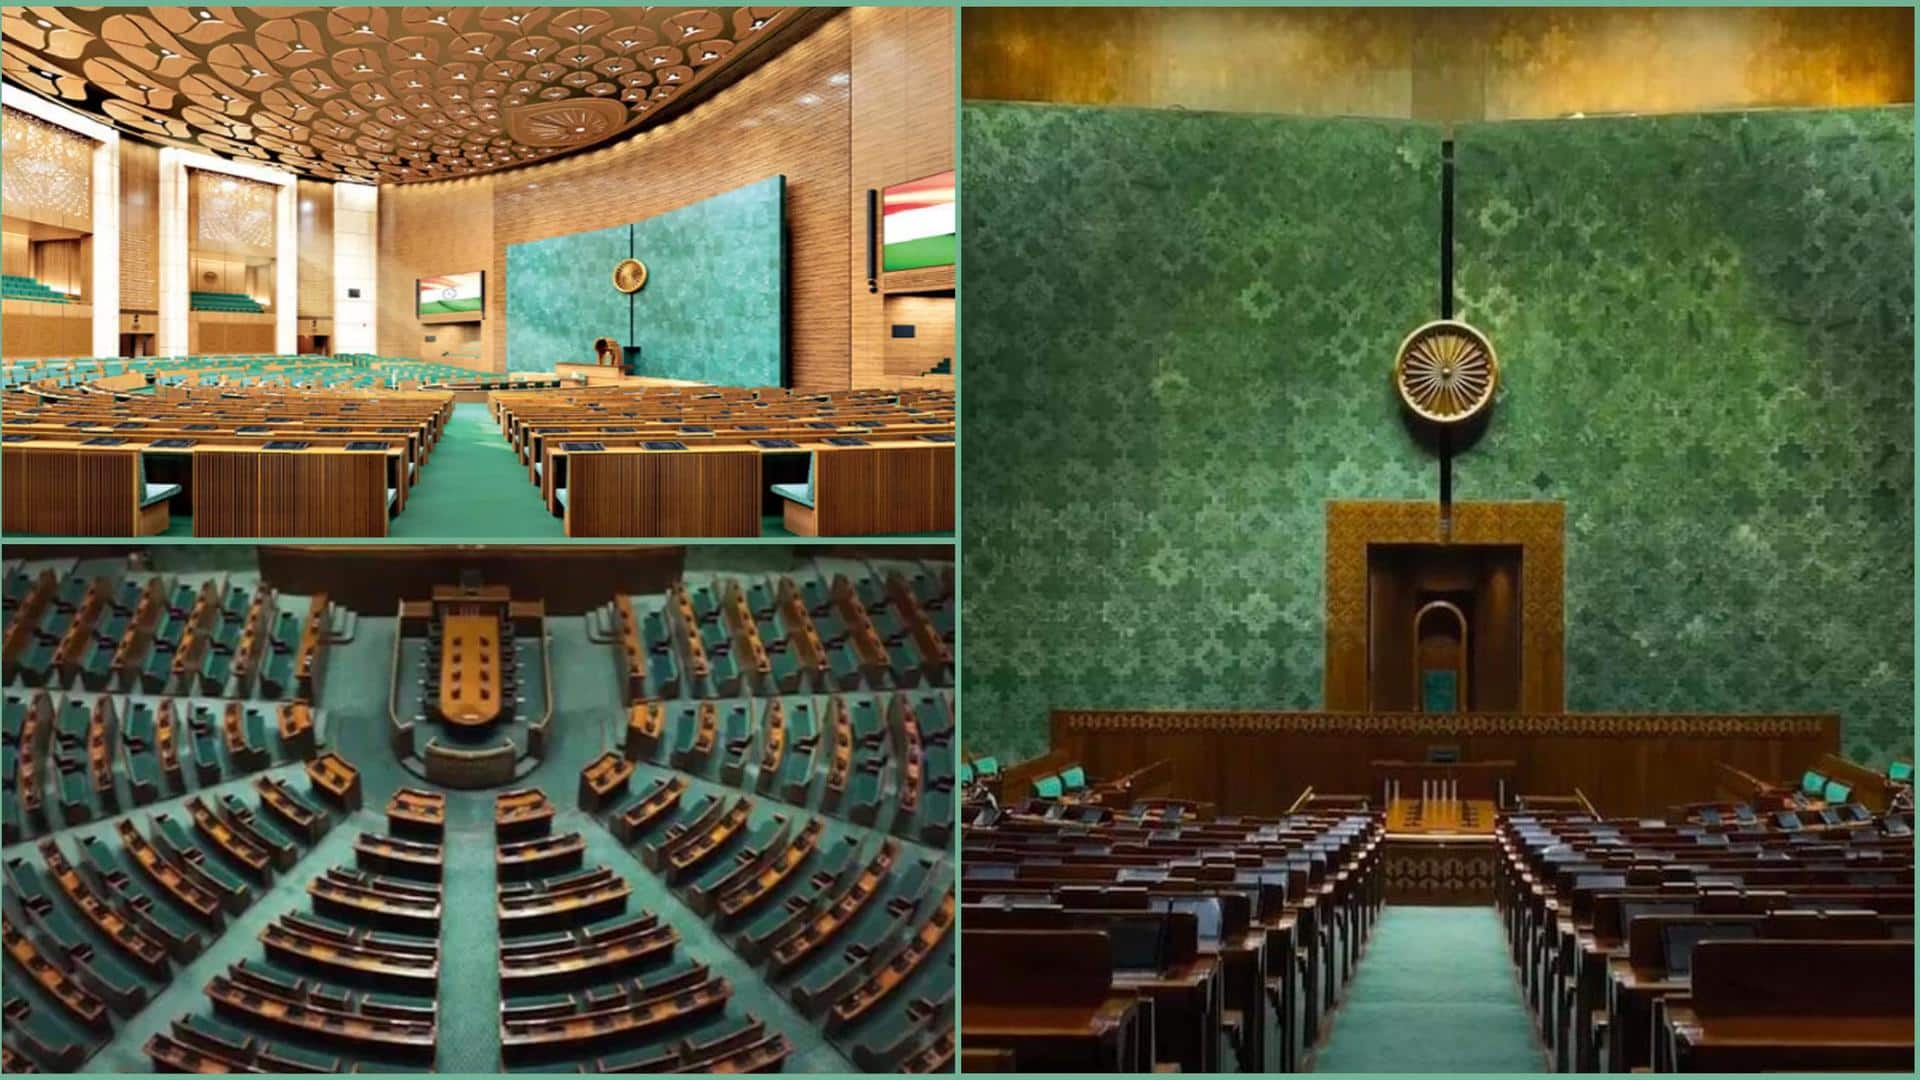 Lotus, peacock, and banyan tree; Look inside new Parliament